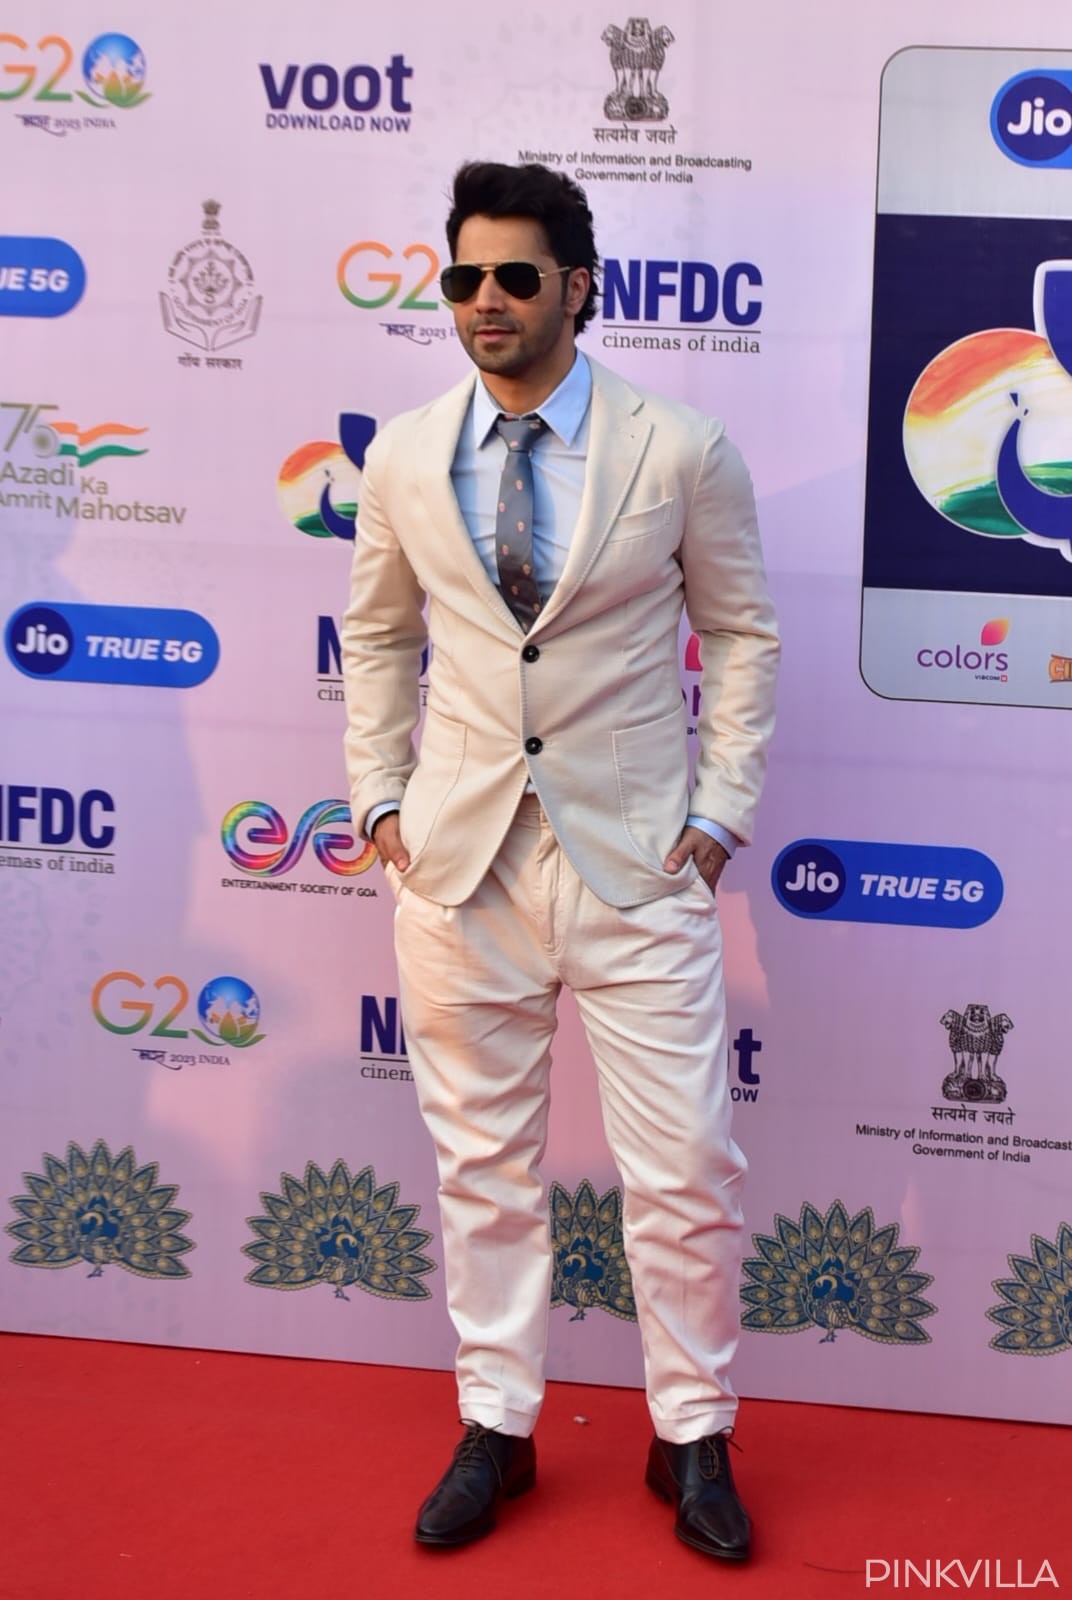 Varun Dhawan dons his all-white attire